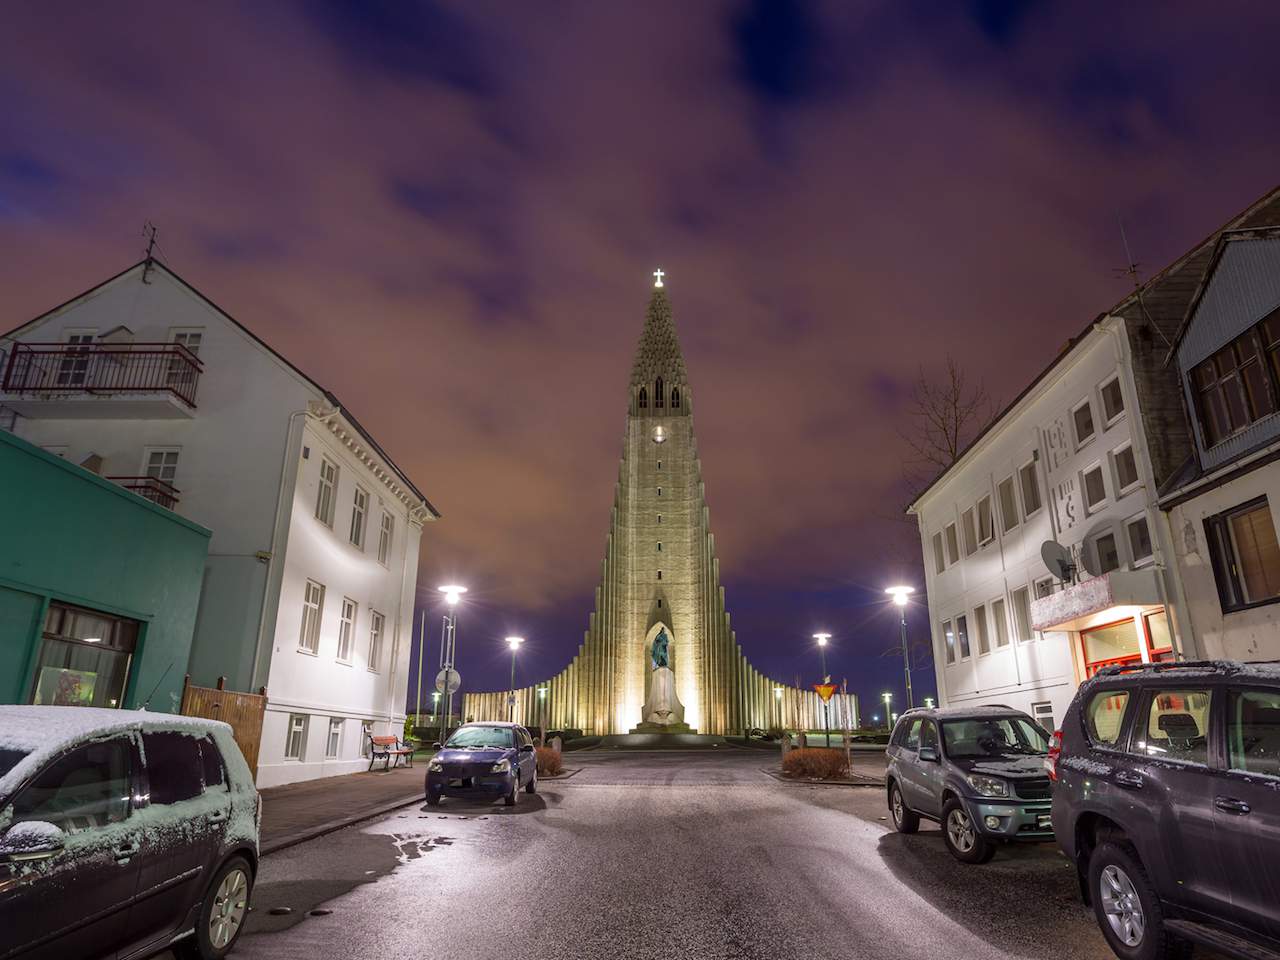 Reykjavik in winter